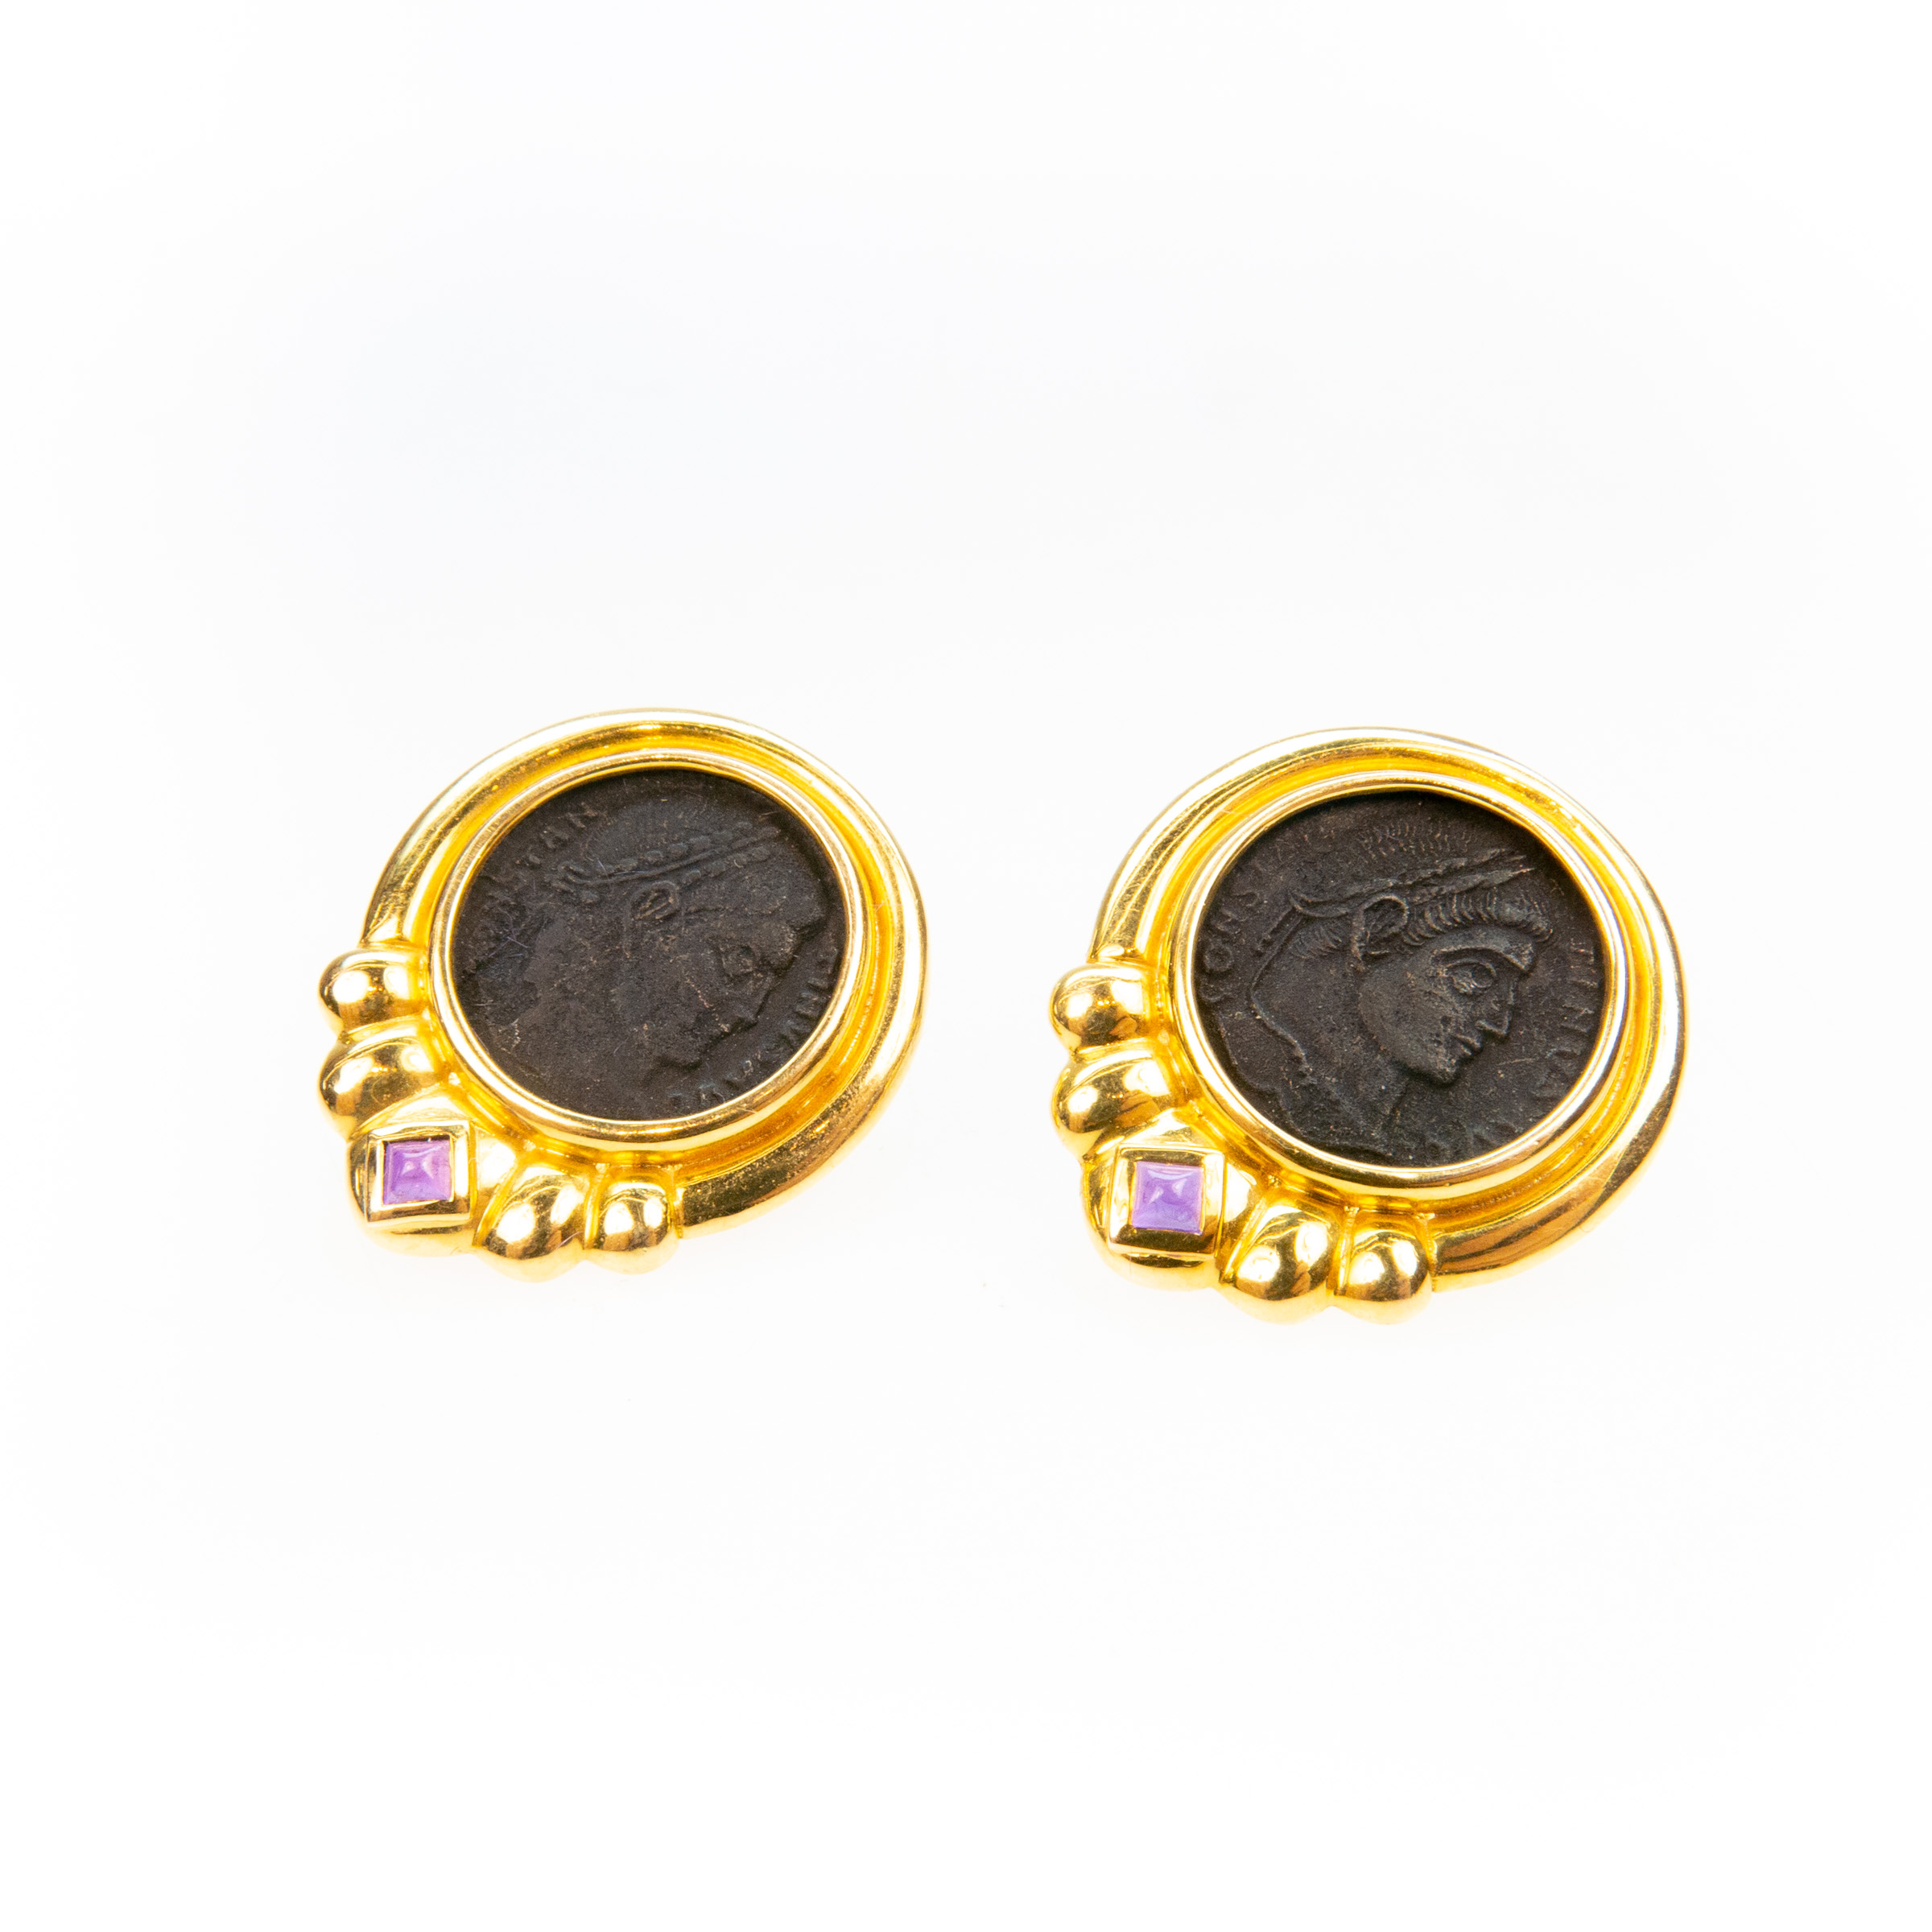 Pair Of 14K Yellow Gold Earrings